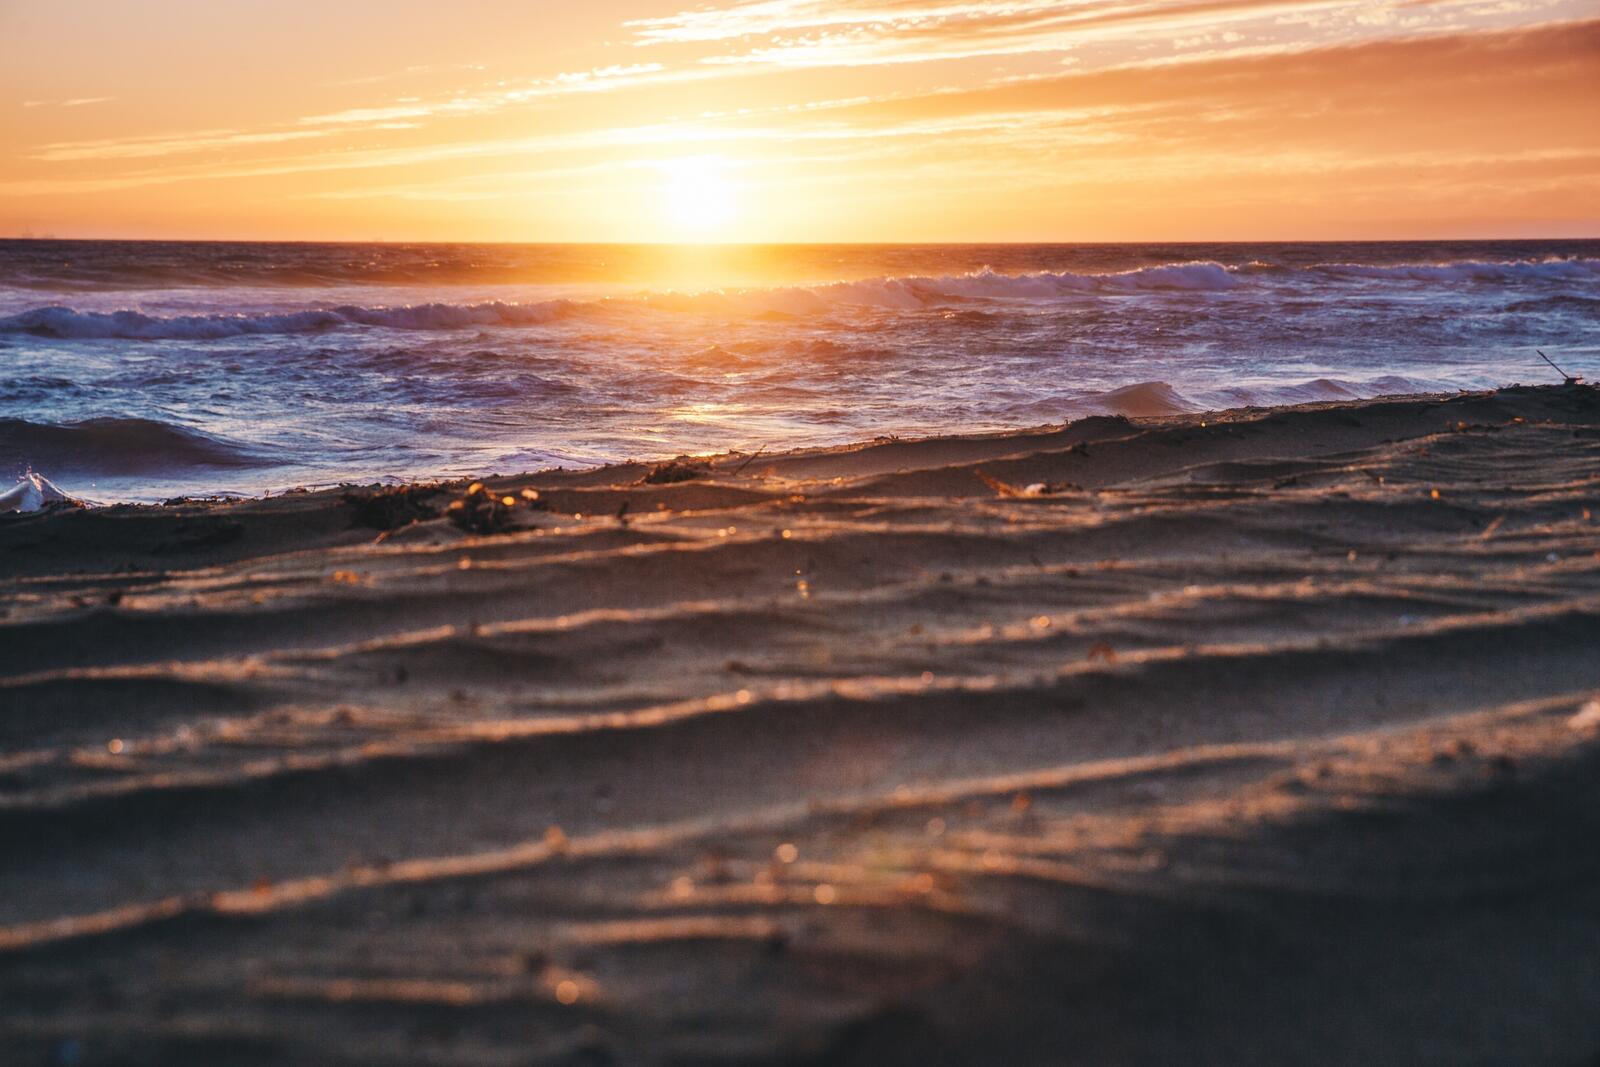 Бесплатное фото Закат на пляже